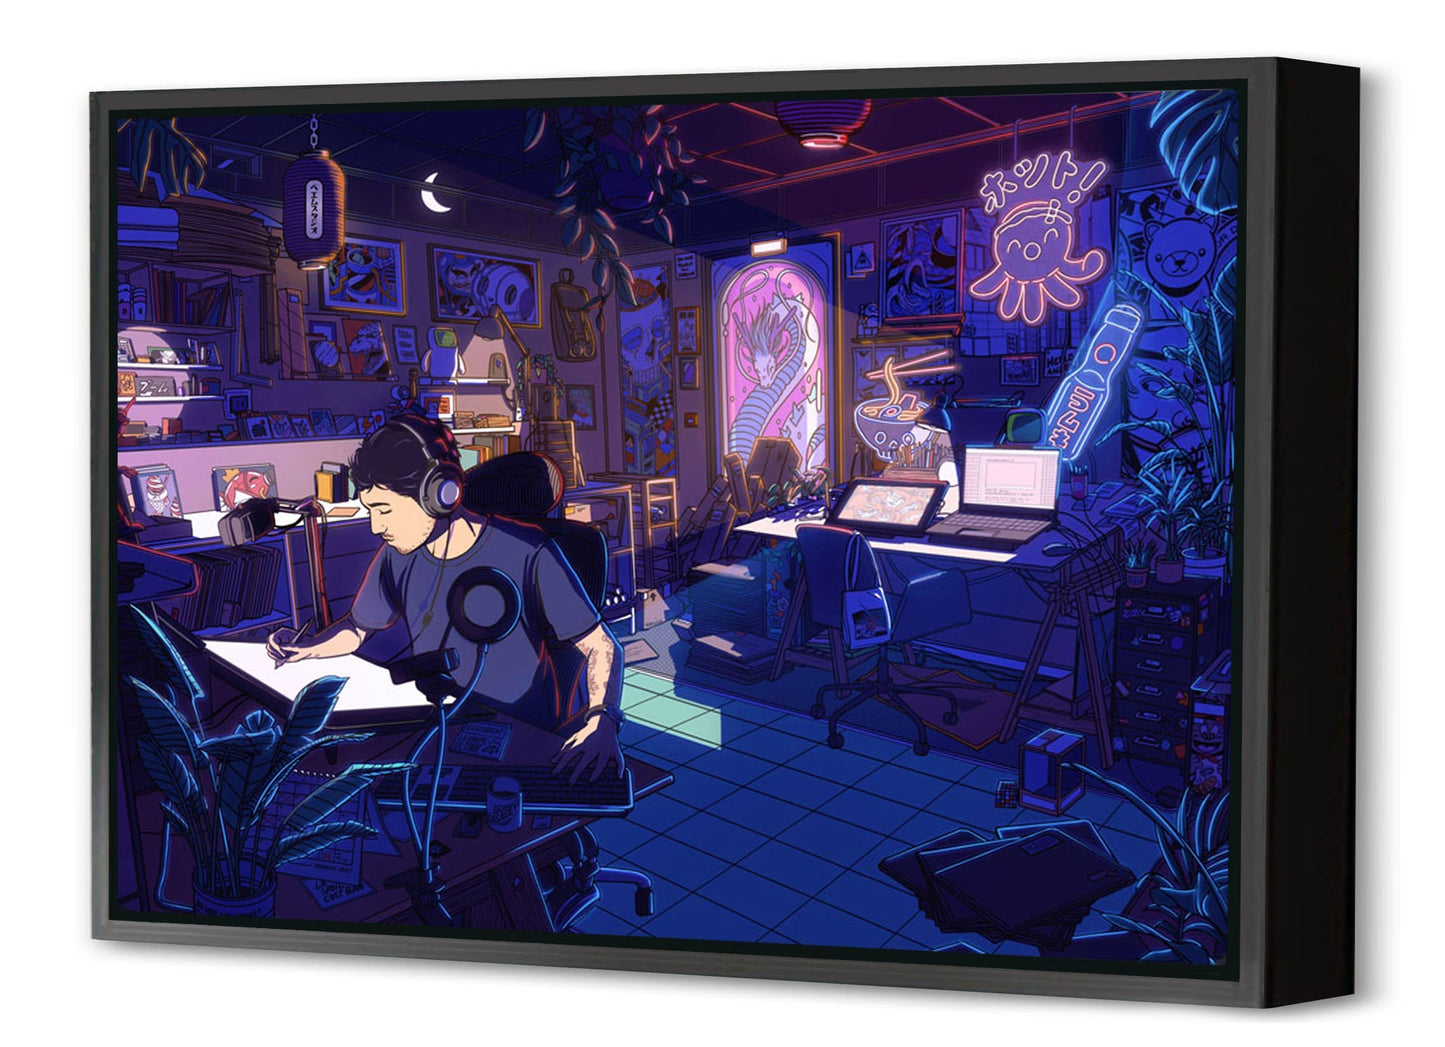 Studio Neons-paiheme-studio, print-Canvas Print with Box Frame-40 x 60 cm-BLUE SHAKER